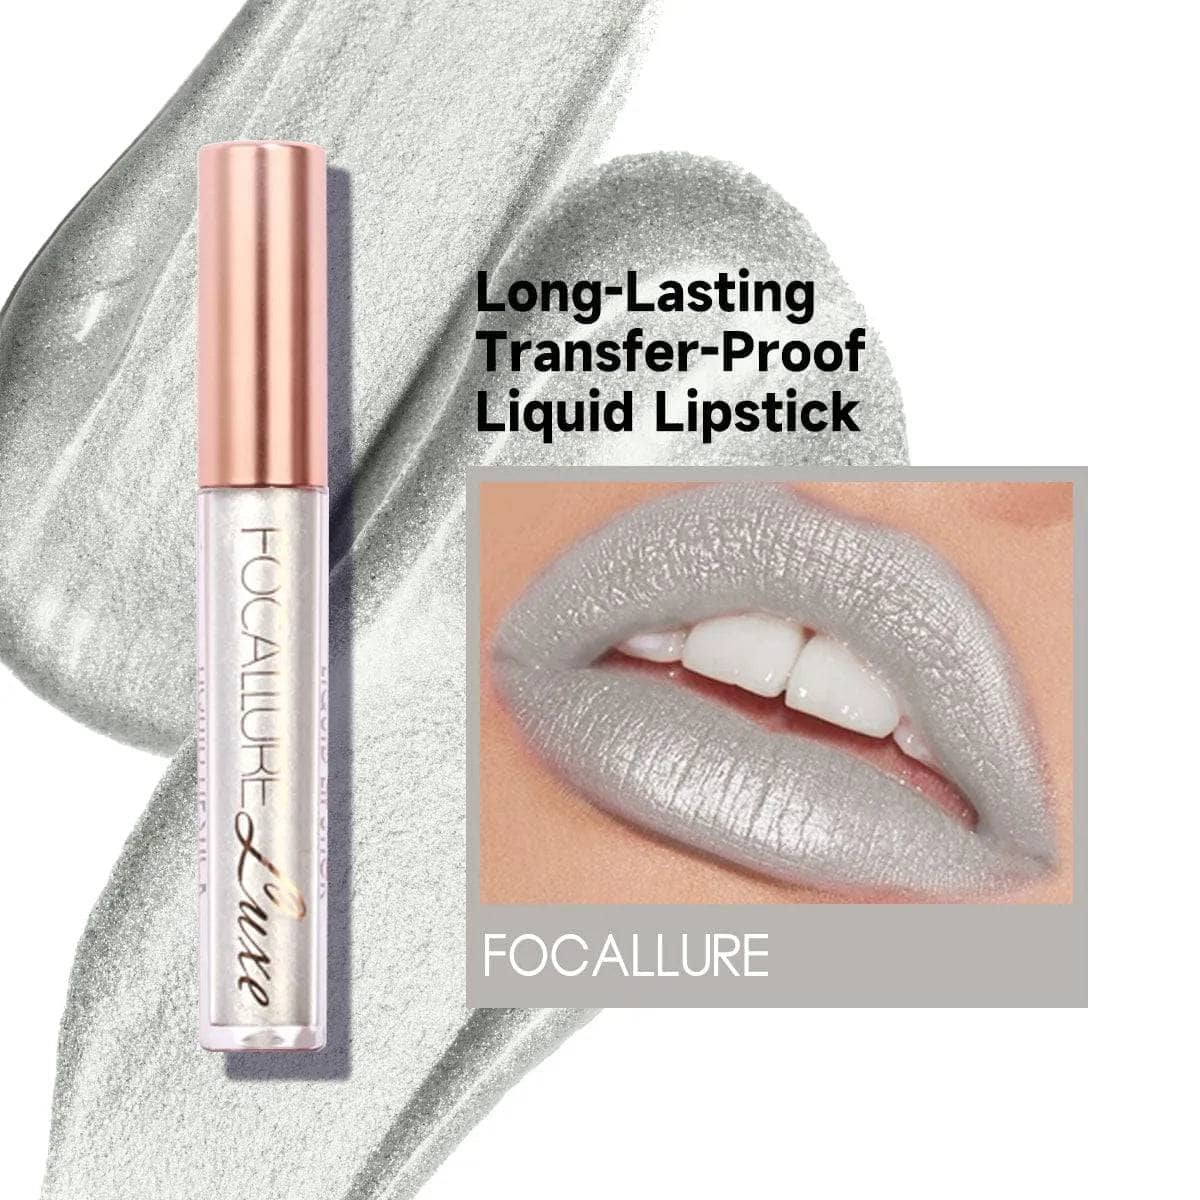 Transfer-Proof Liquid Lipstick #37 Platinum Silver